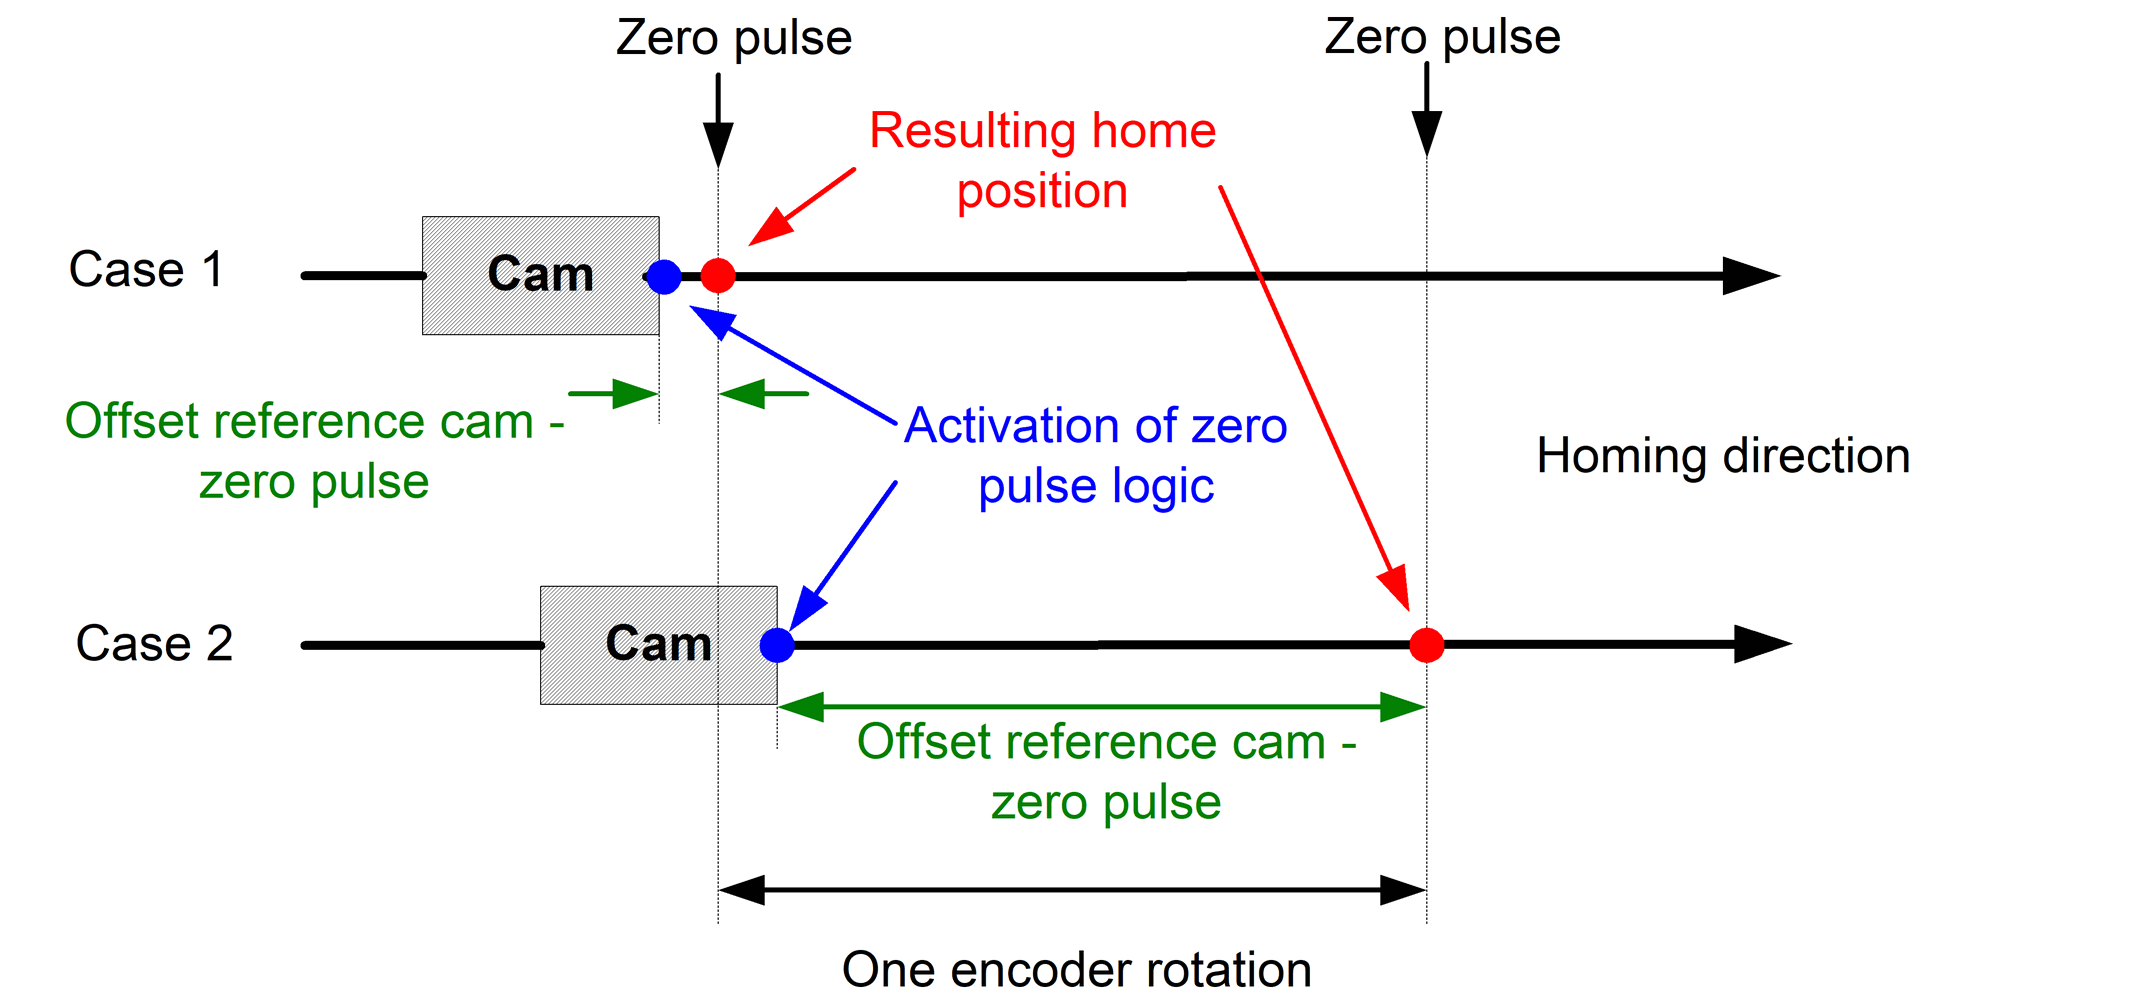 Delayed activation of zero pulse logic 1: